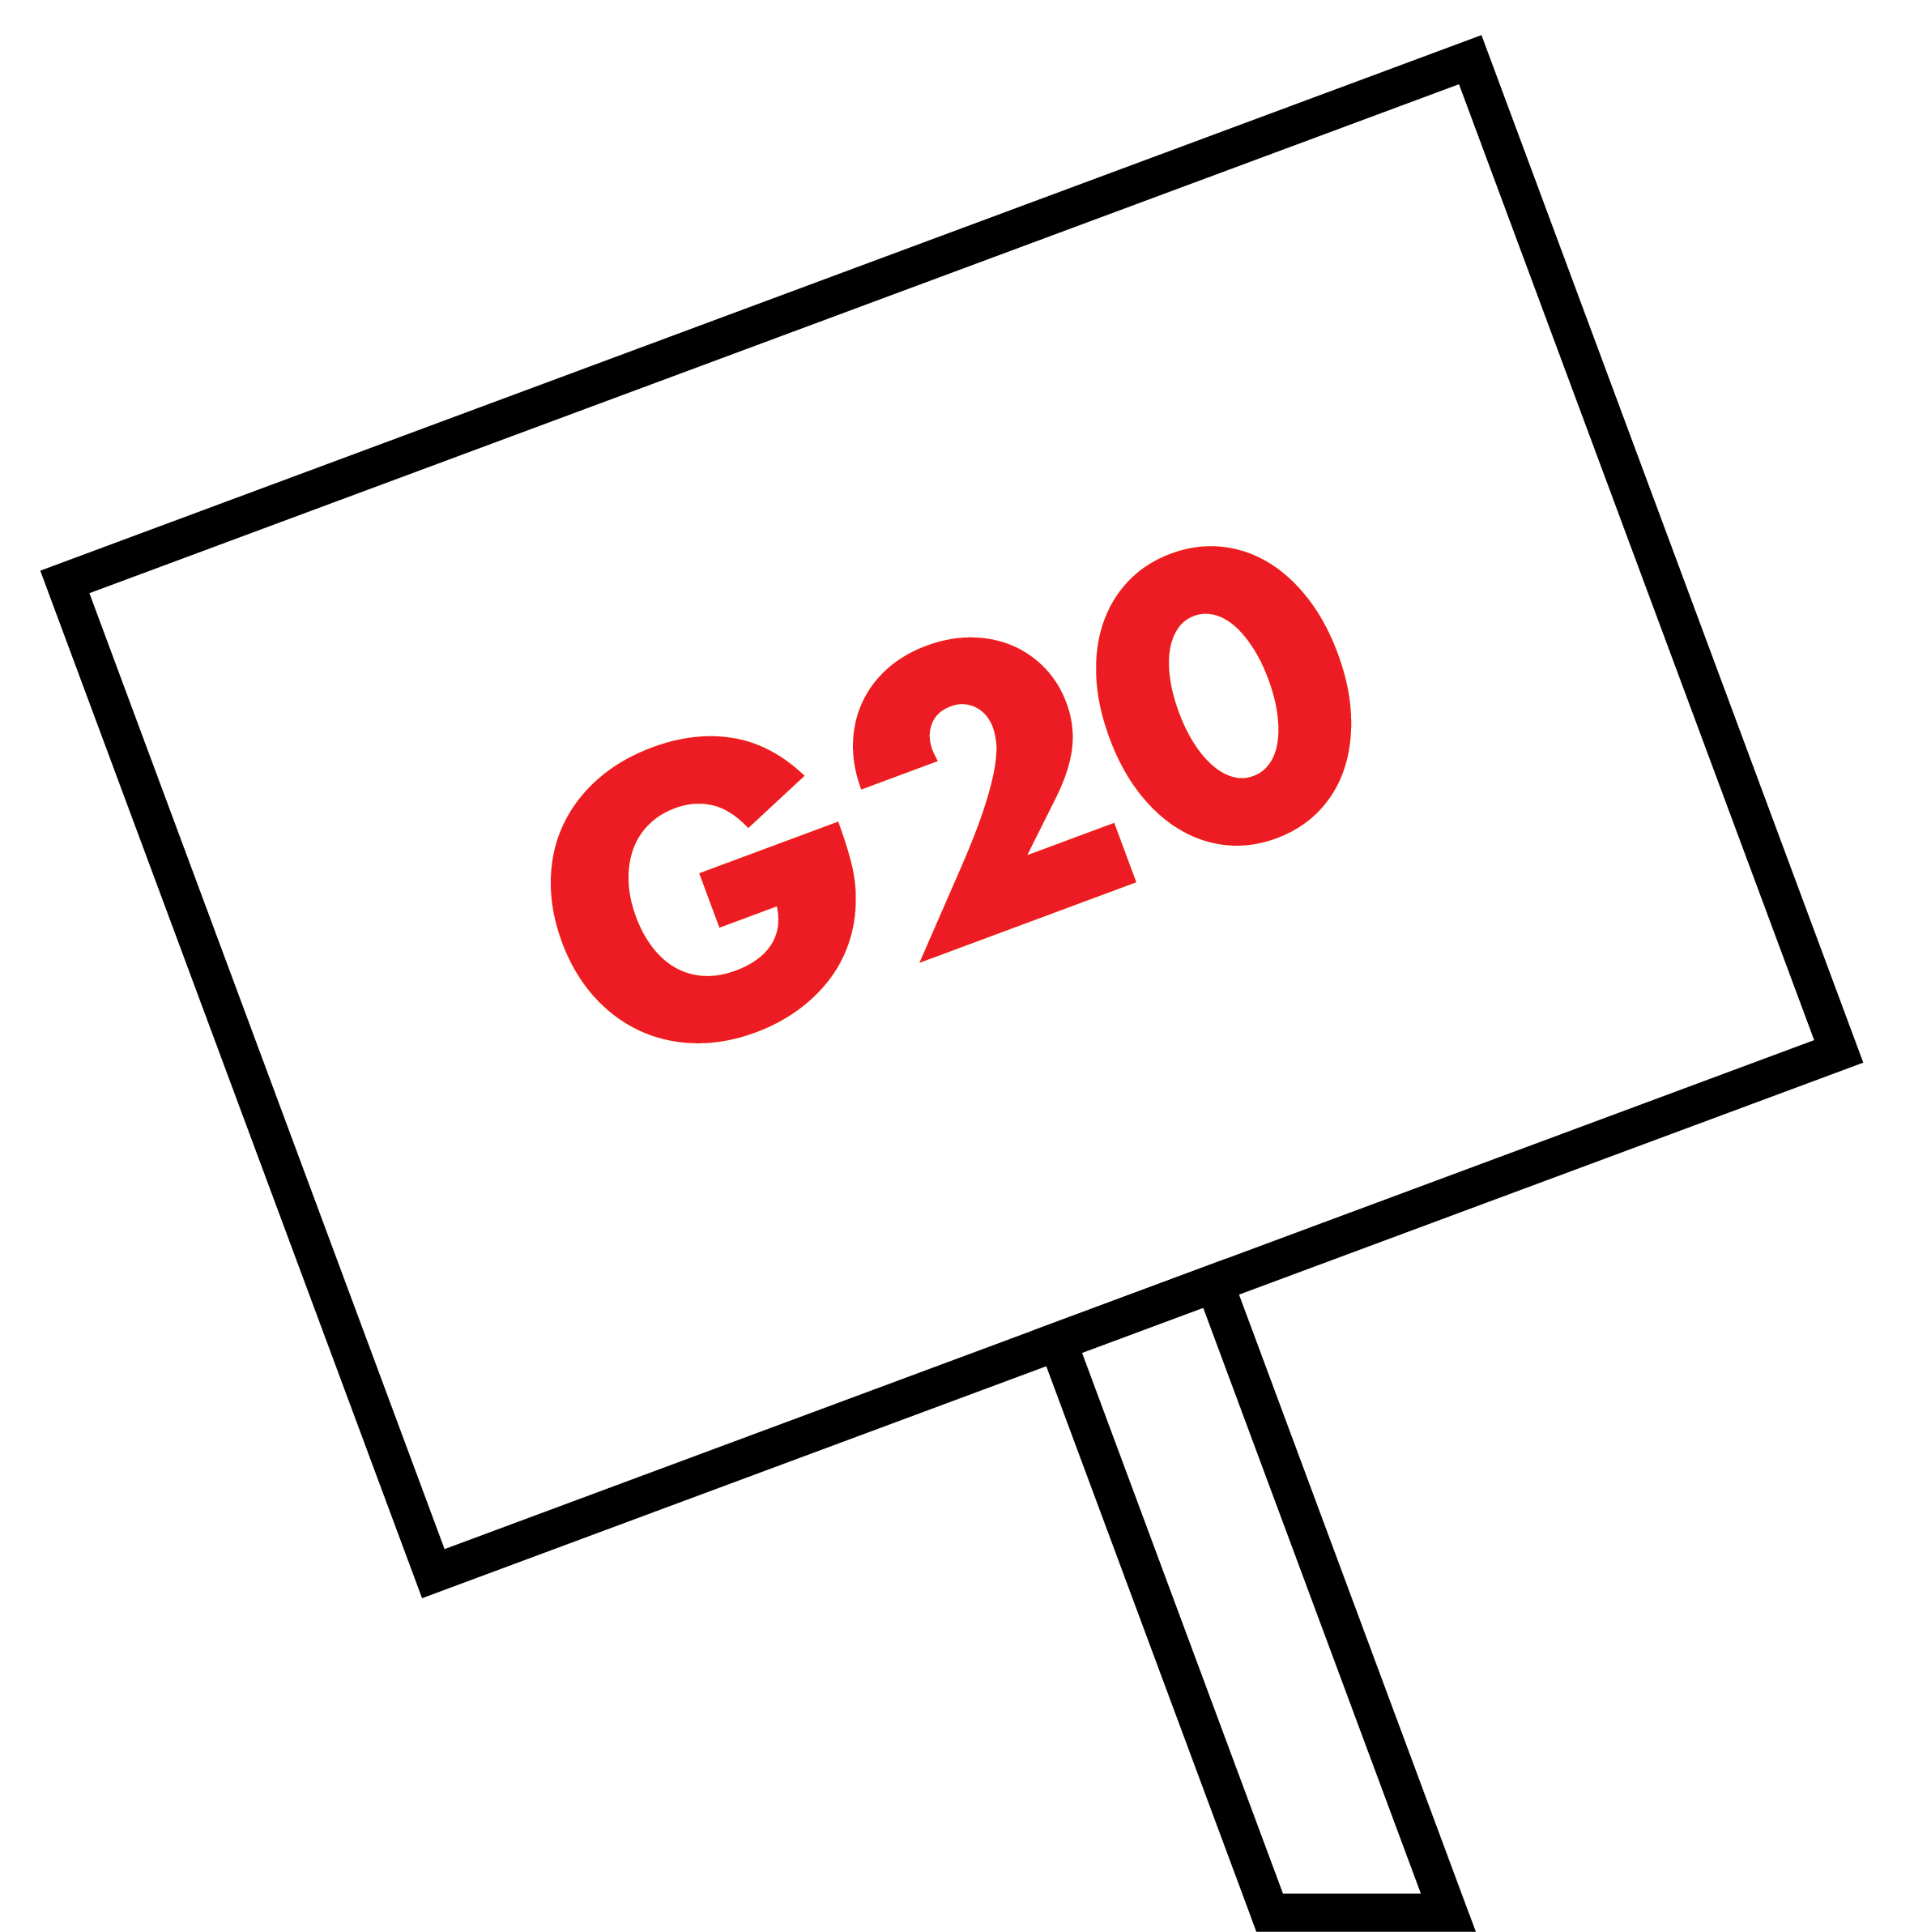 Protest in retrospect: G20 summits